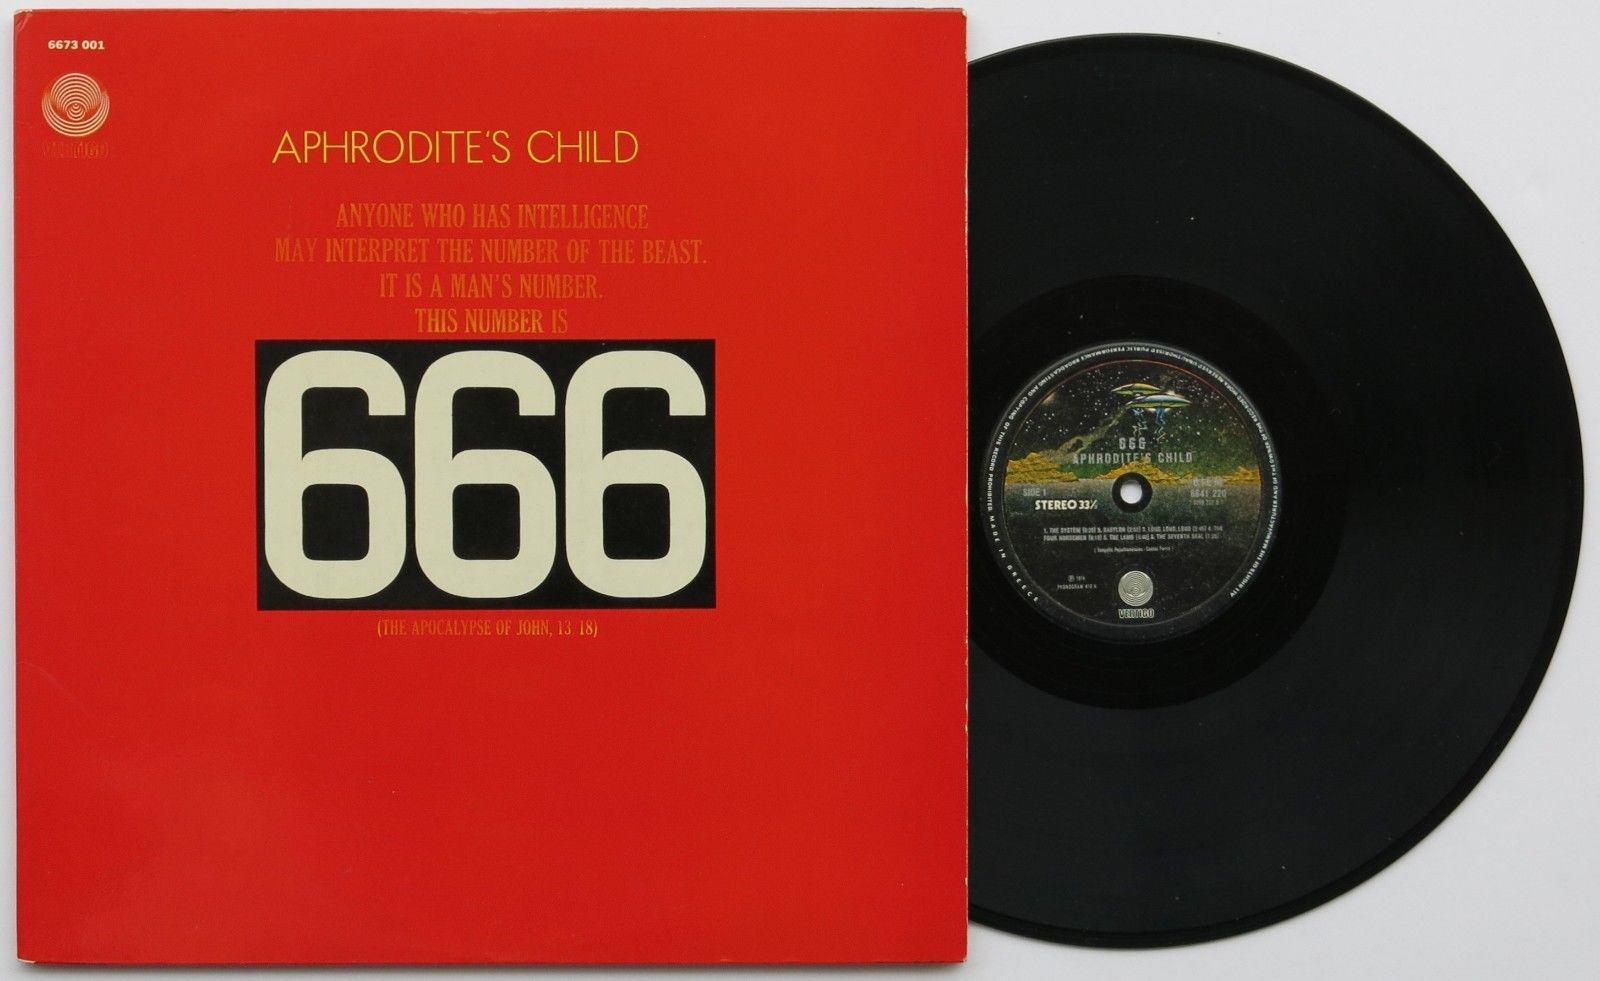 Альбомы 1972 года. Vangelis 666. 666 - - Музыкальный альбом. Aphrodite's child - the best of 1967-1972. Aphrodite's child - the Singles+.